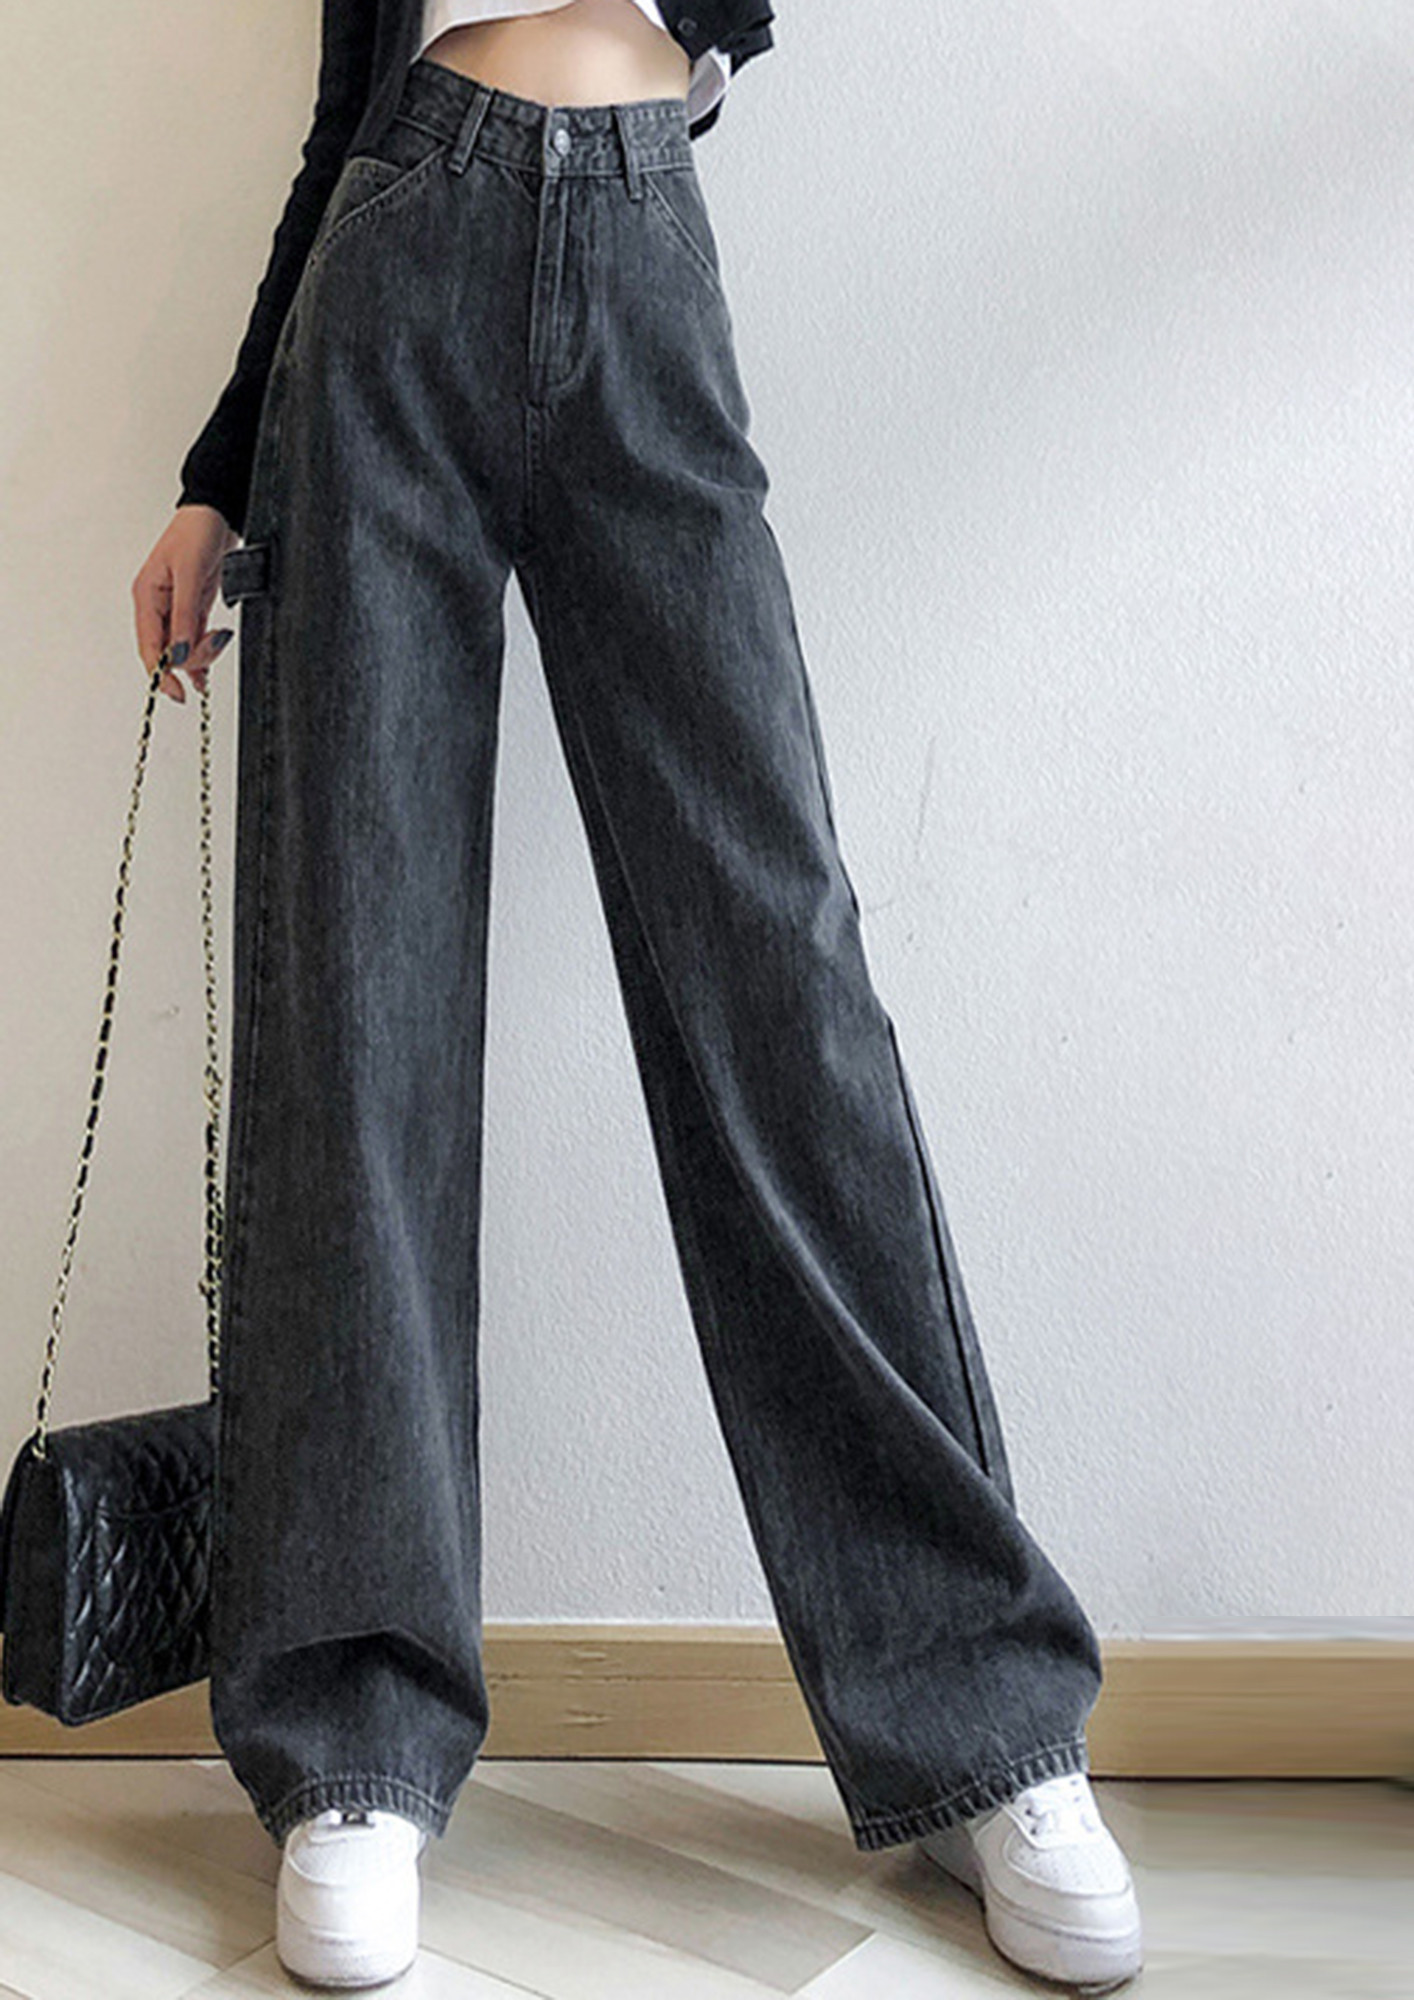 Women's black jeans, Shop denim fashion online